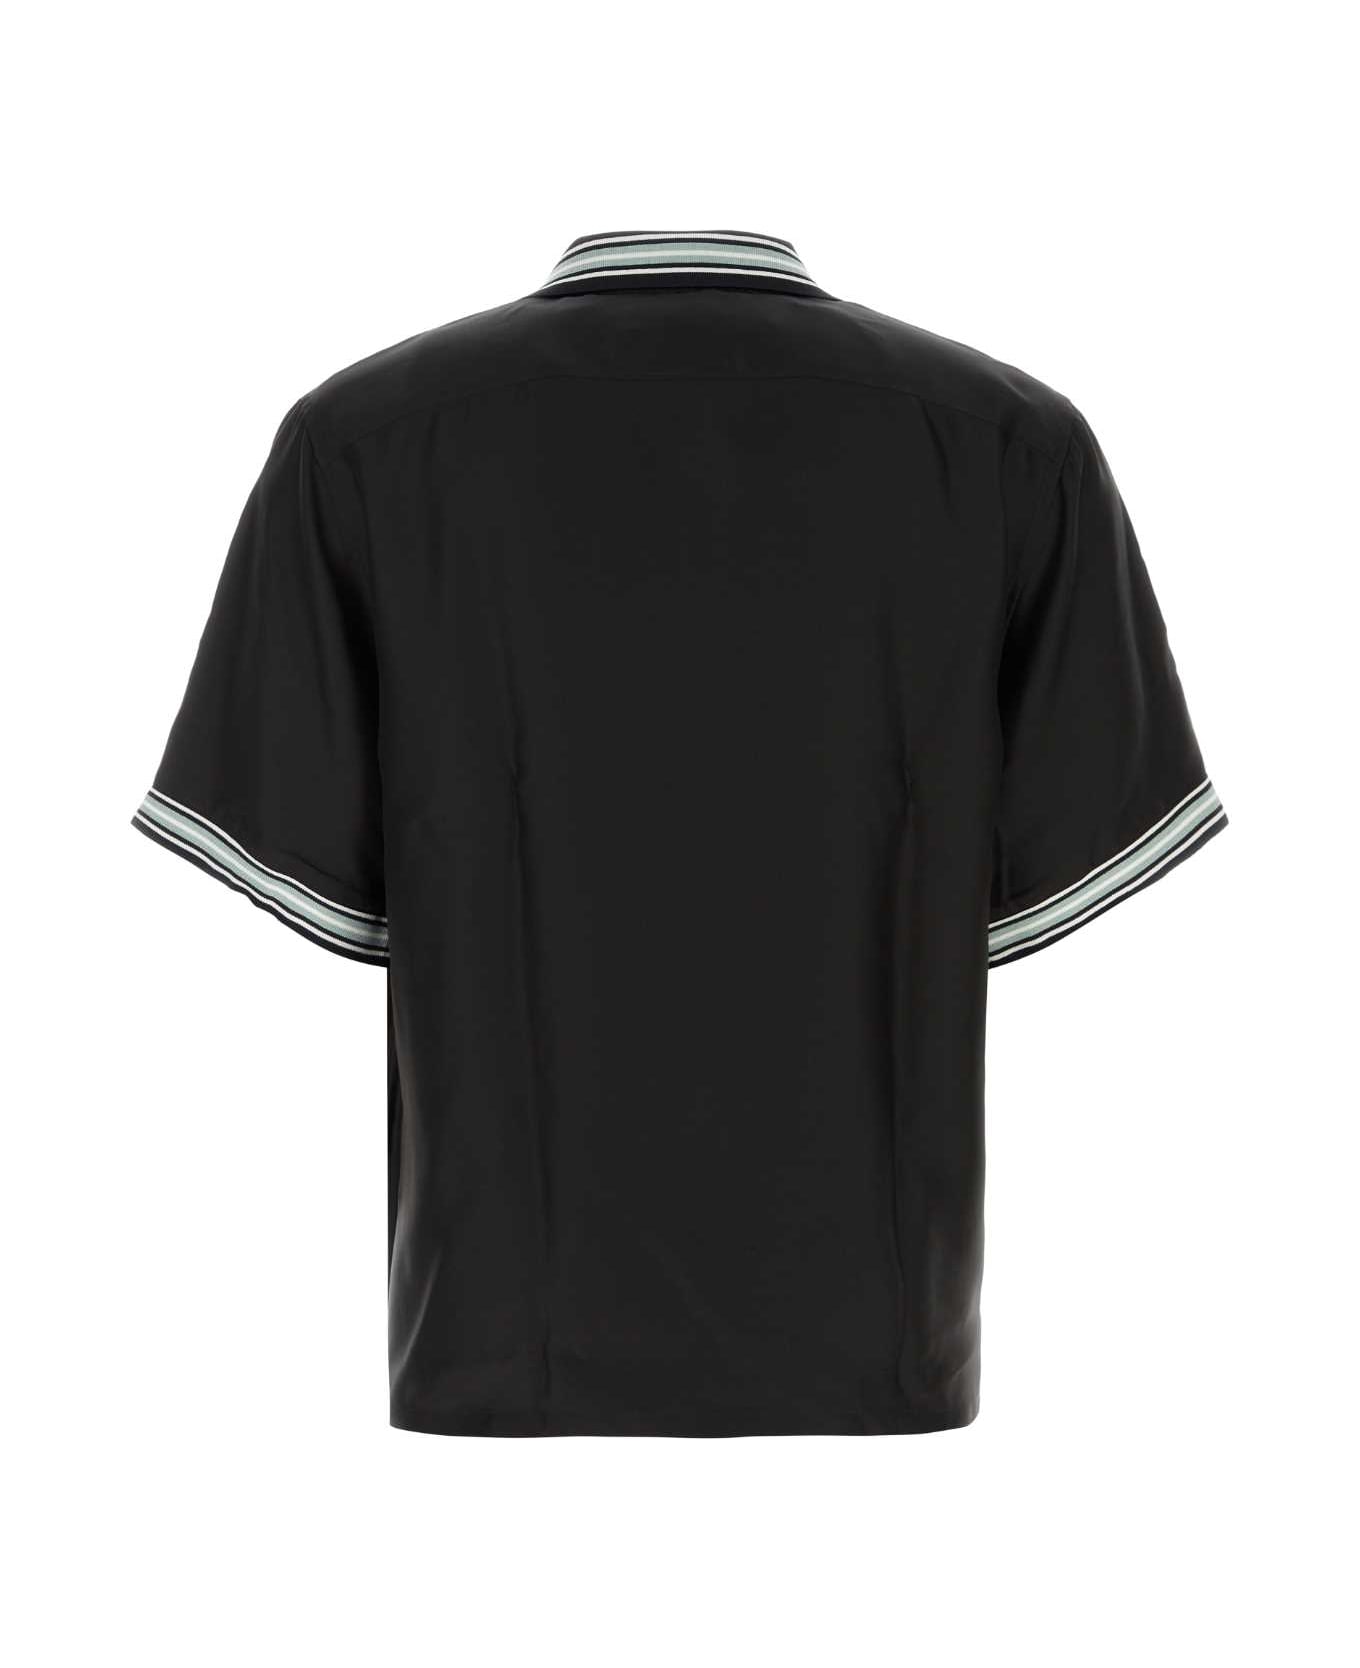 Prada Black Twill Shirt - NERO